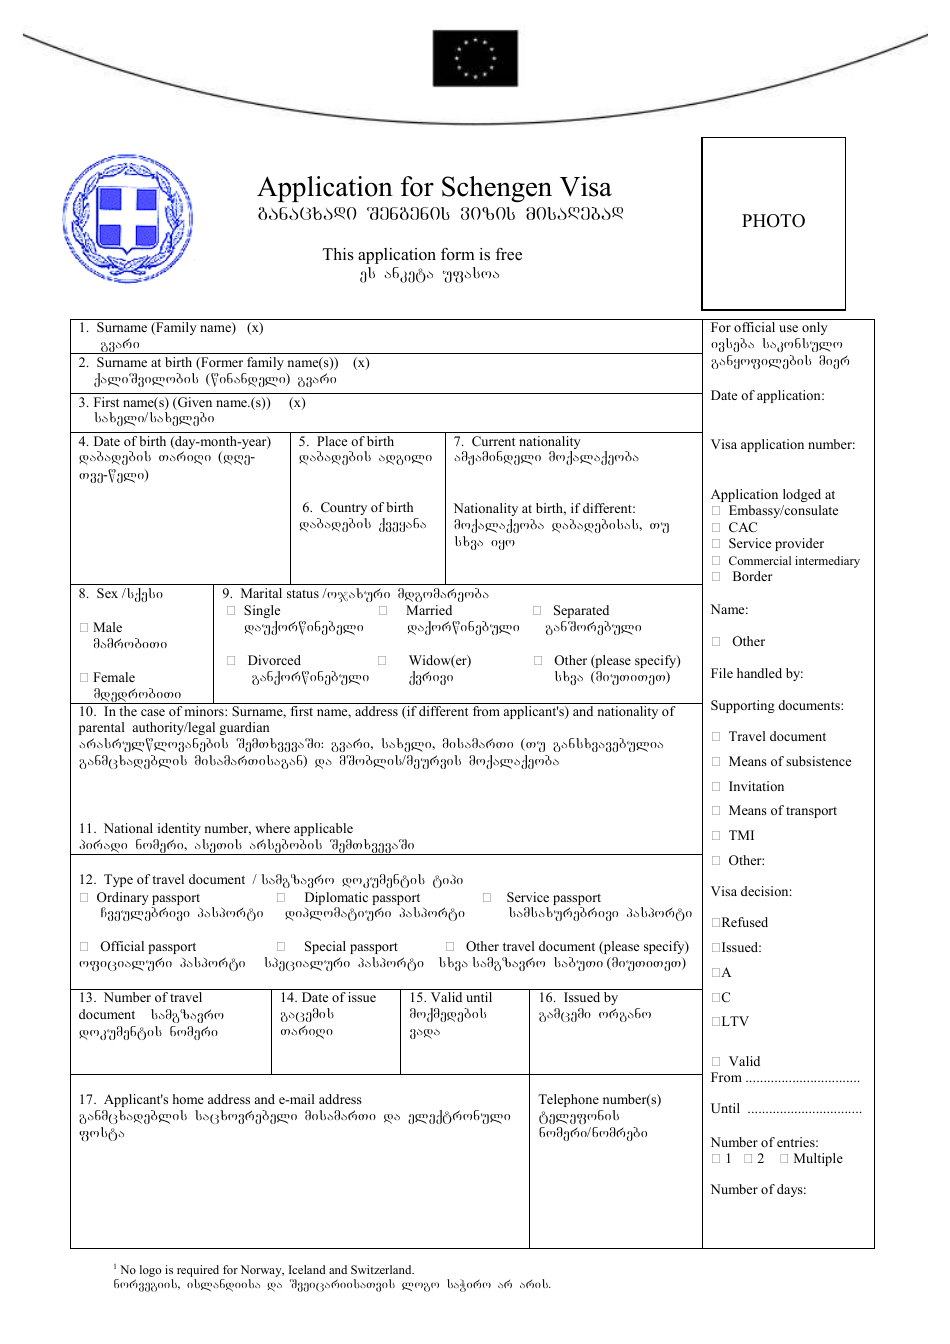 Schengen Visa Application Form - Greece, Page 1